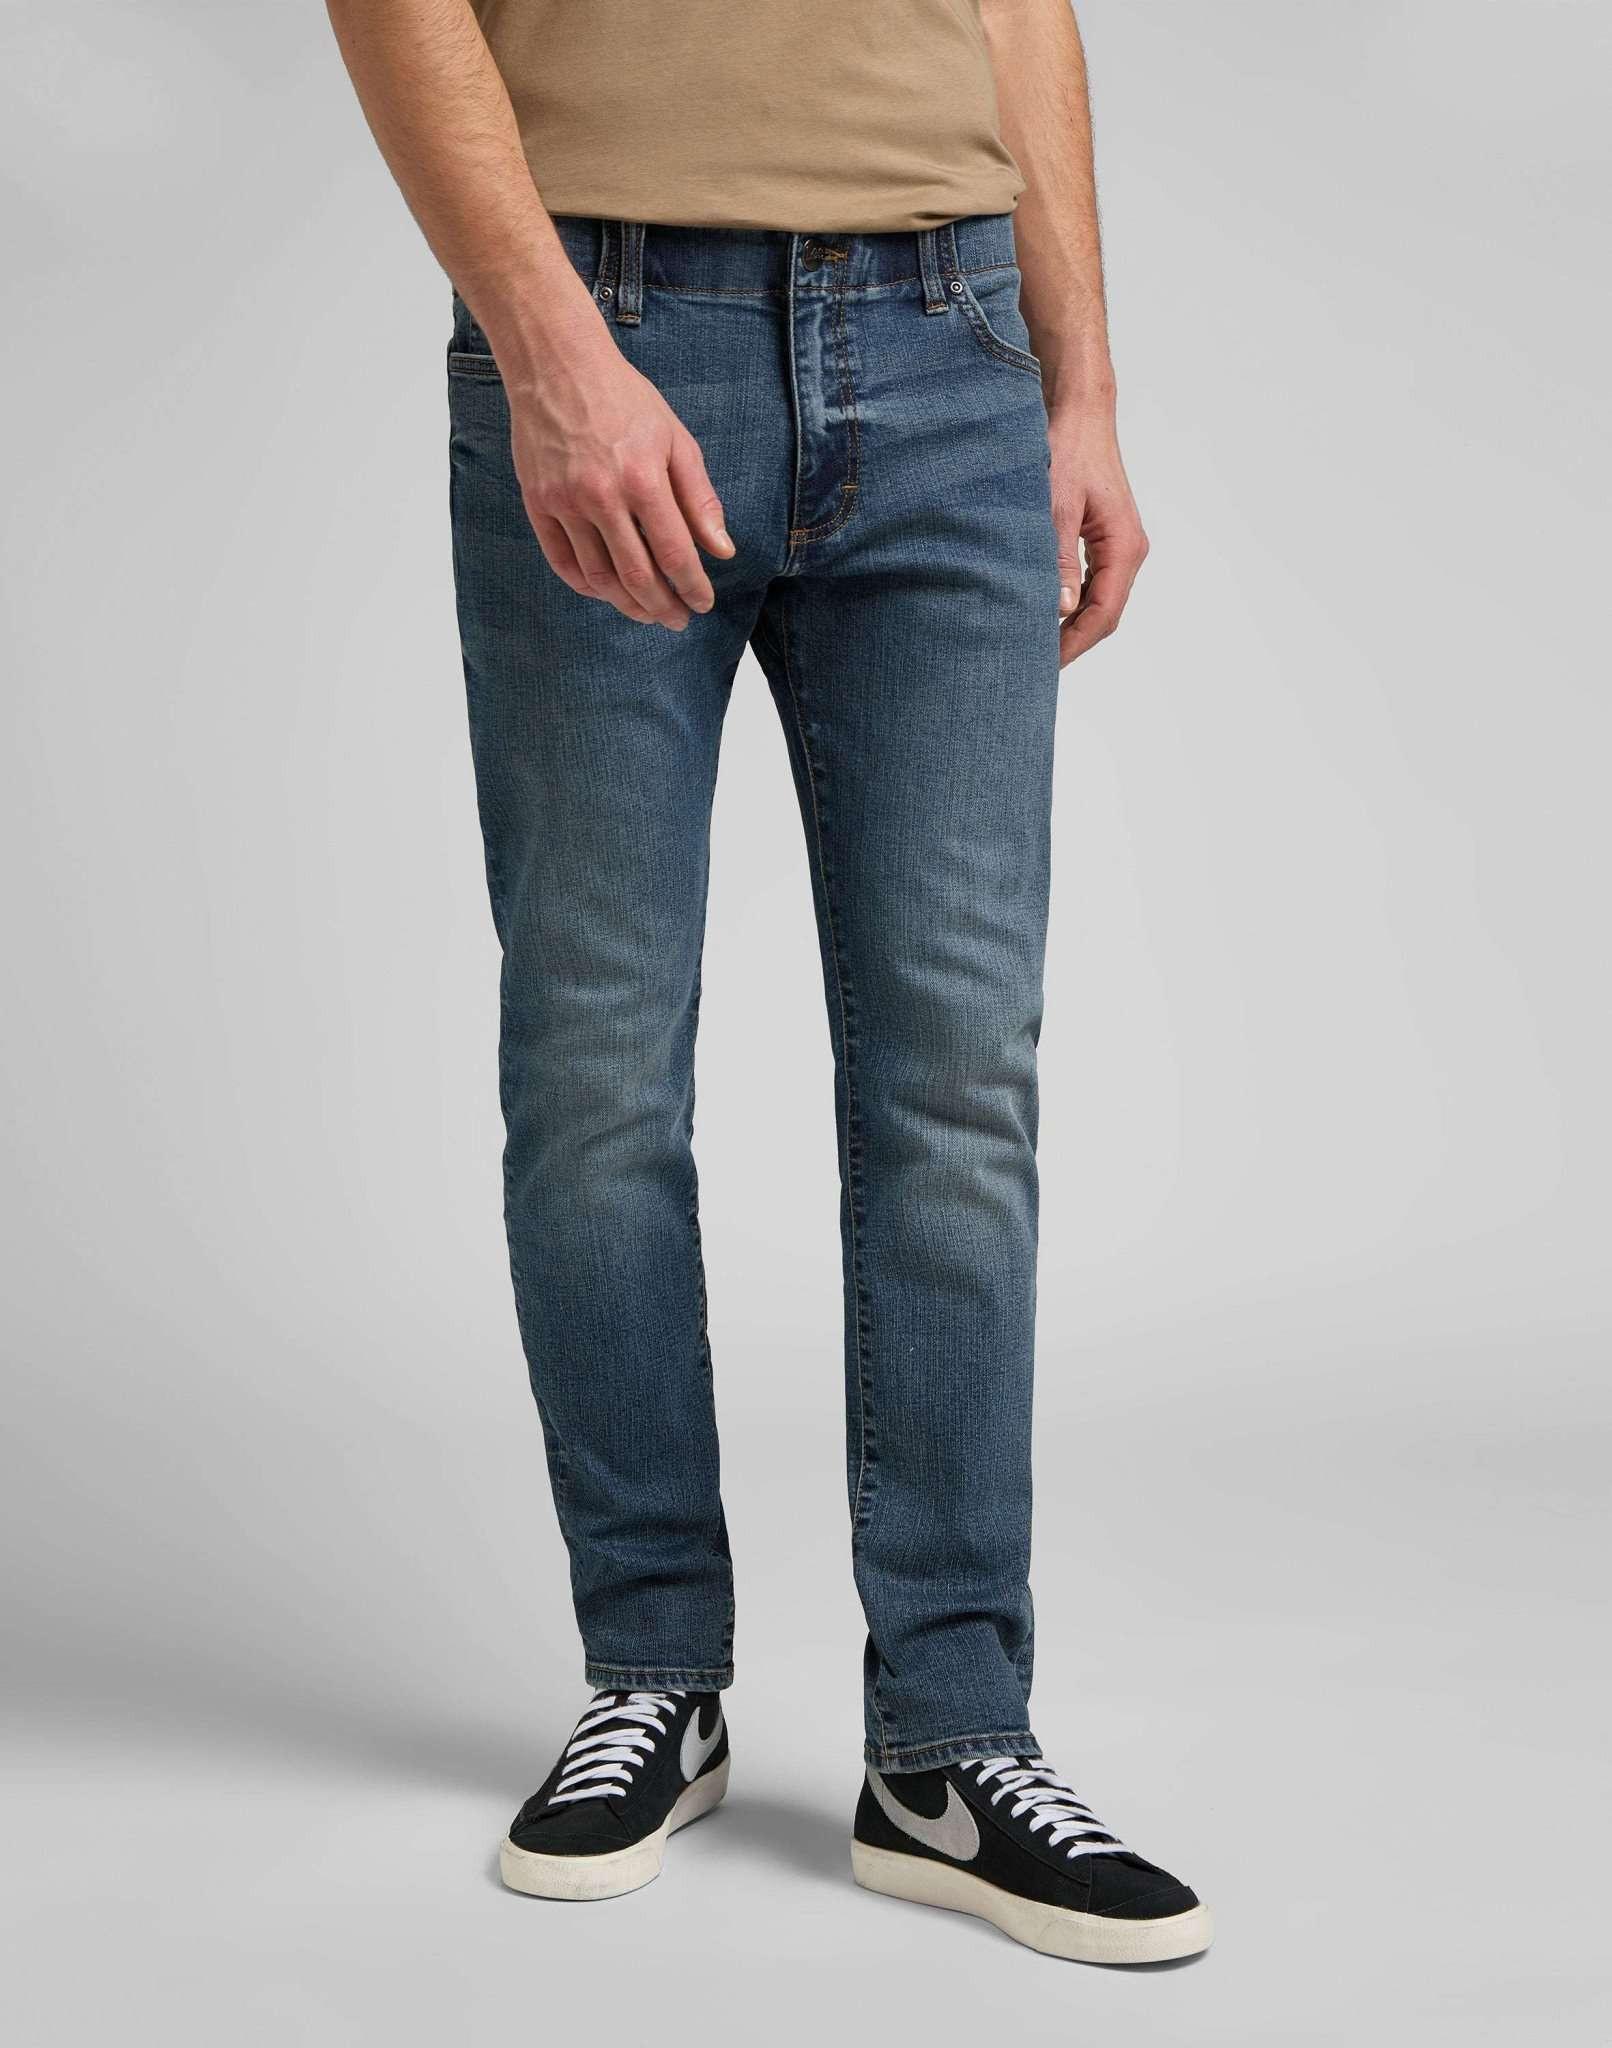 Jeans Skinny Fit Xm Herren Blau Denim L34/W31 von Lee